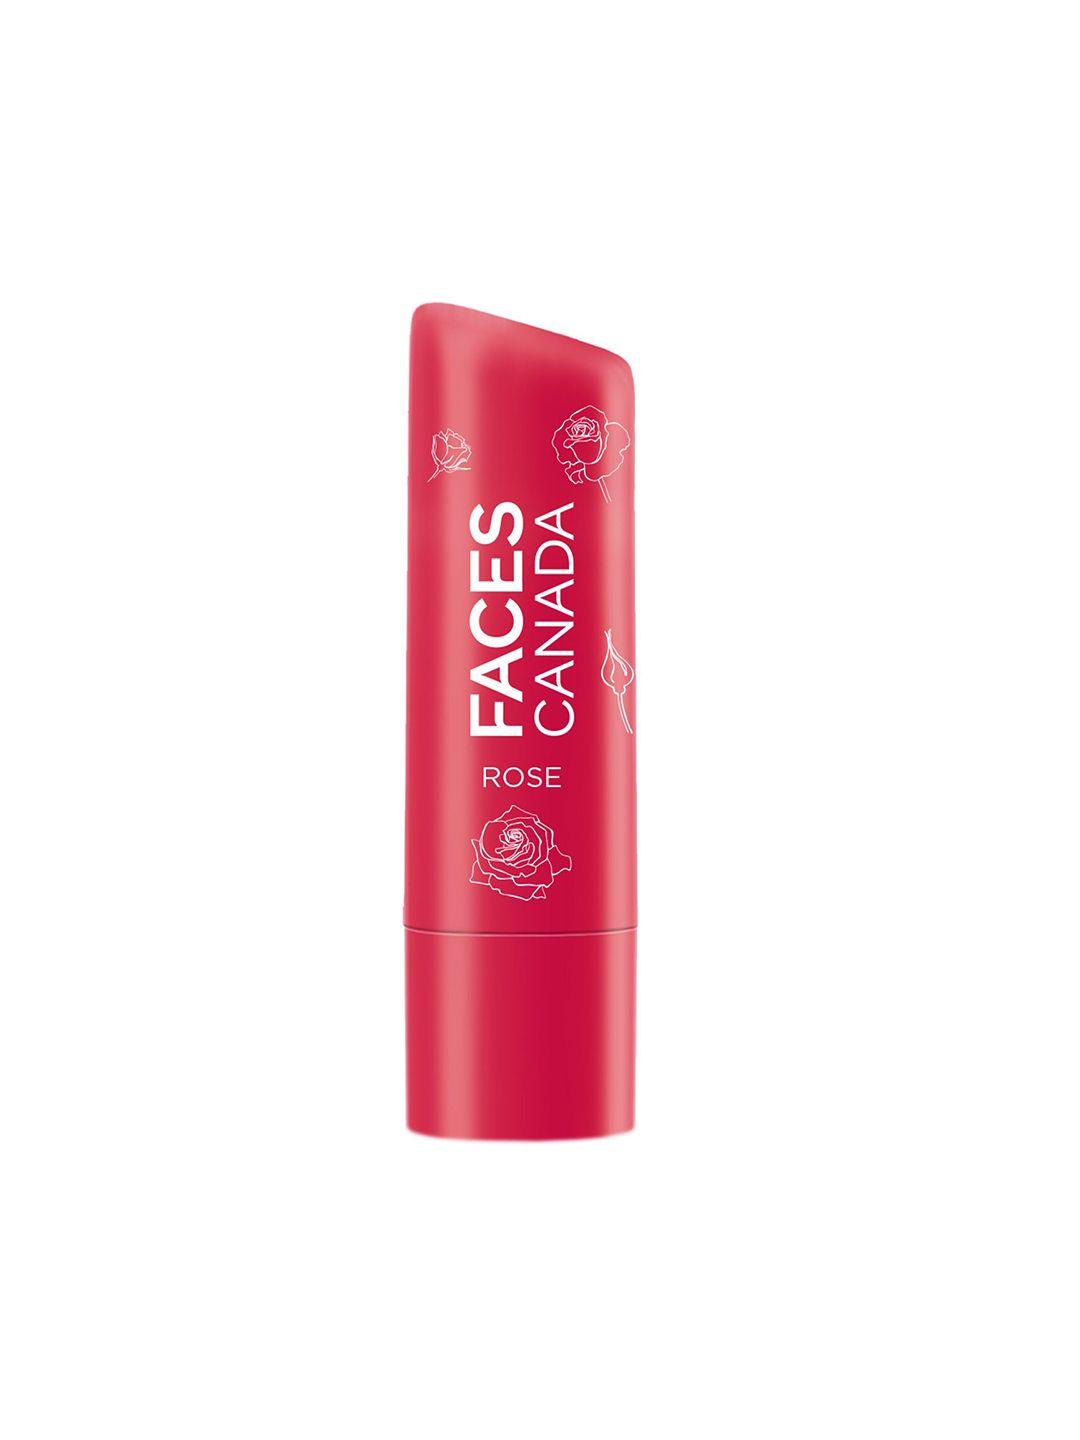 faces canada vitamin c lip balm with 12hr moisture & spf15 - rose petal